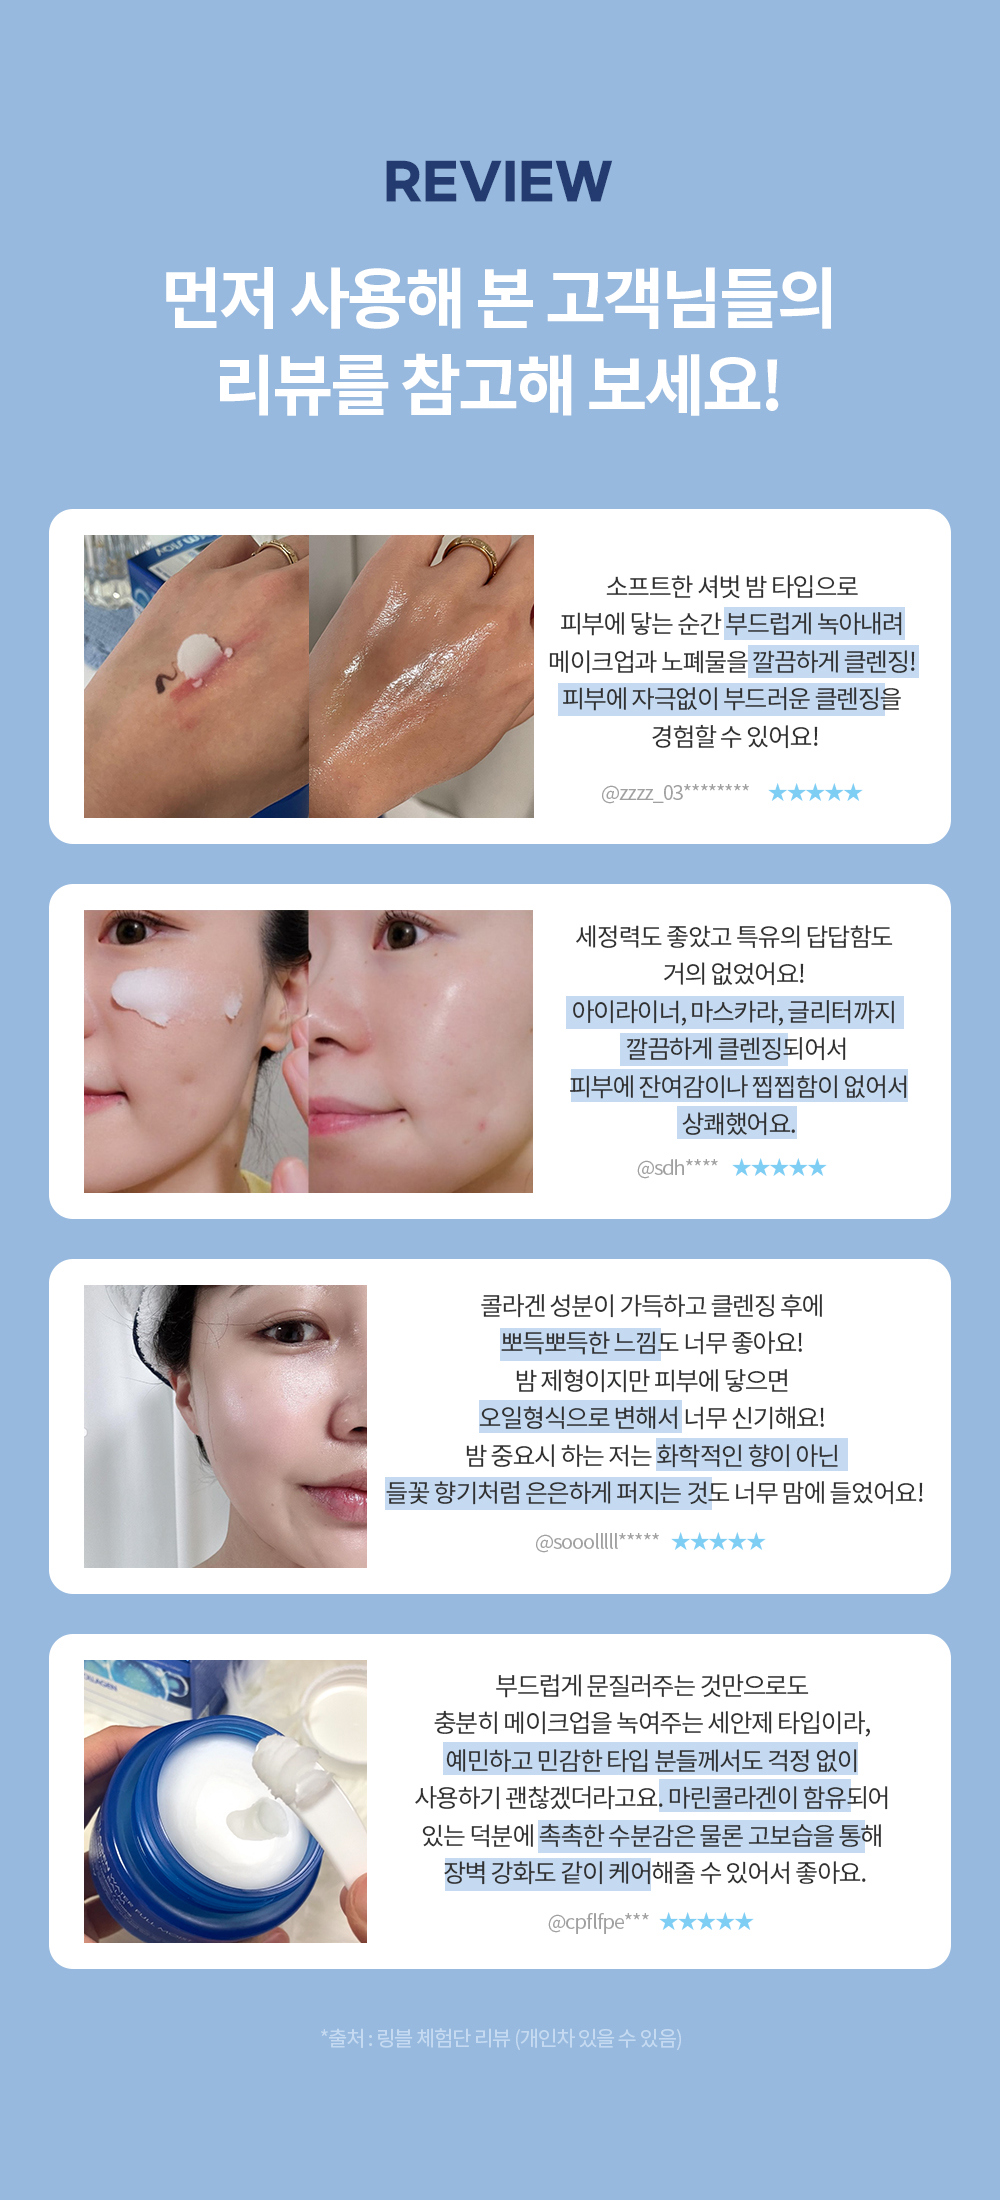 cosmetics product image-S1L12